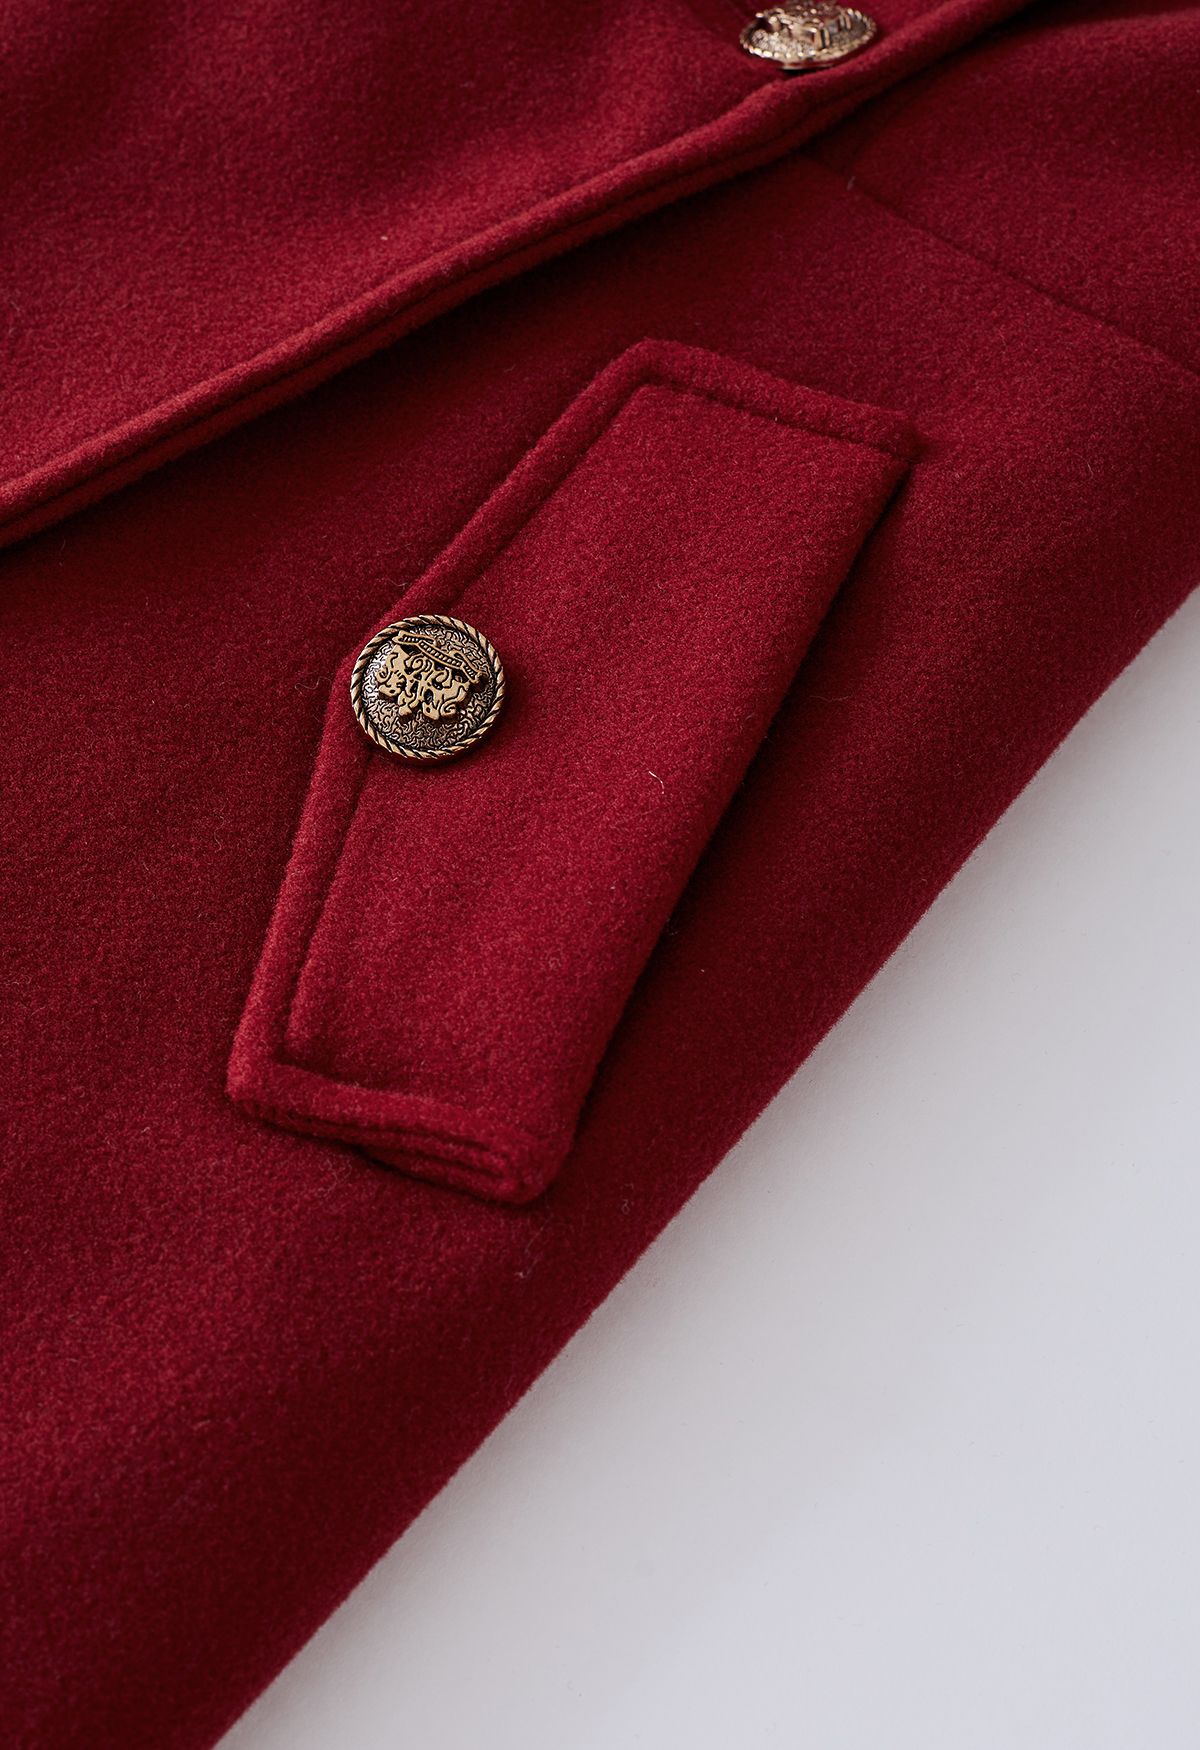 Modish Golden Button Wool-Blend Longline Coat in Red